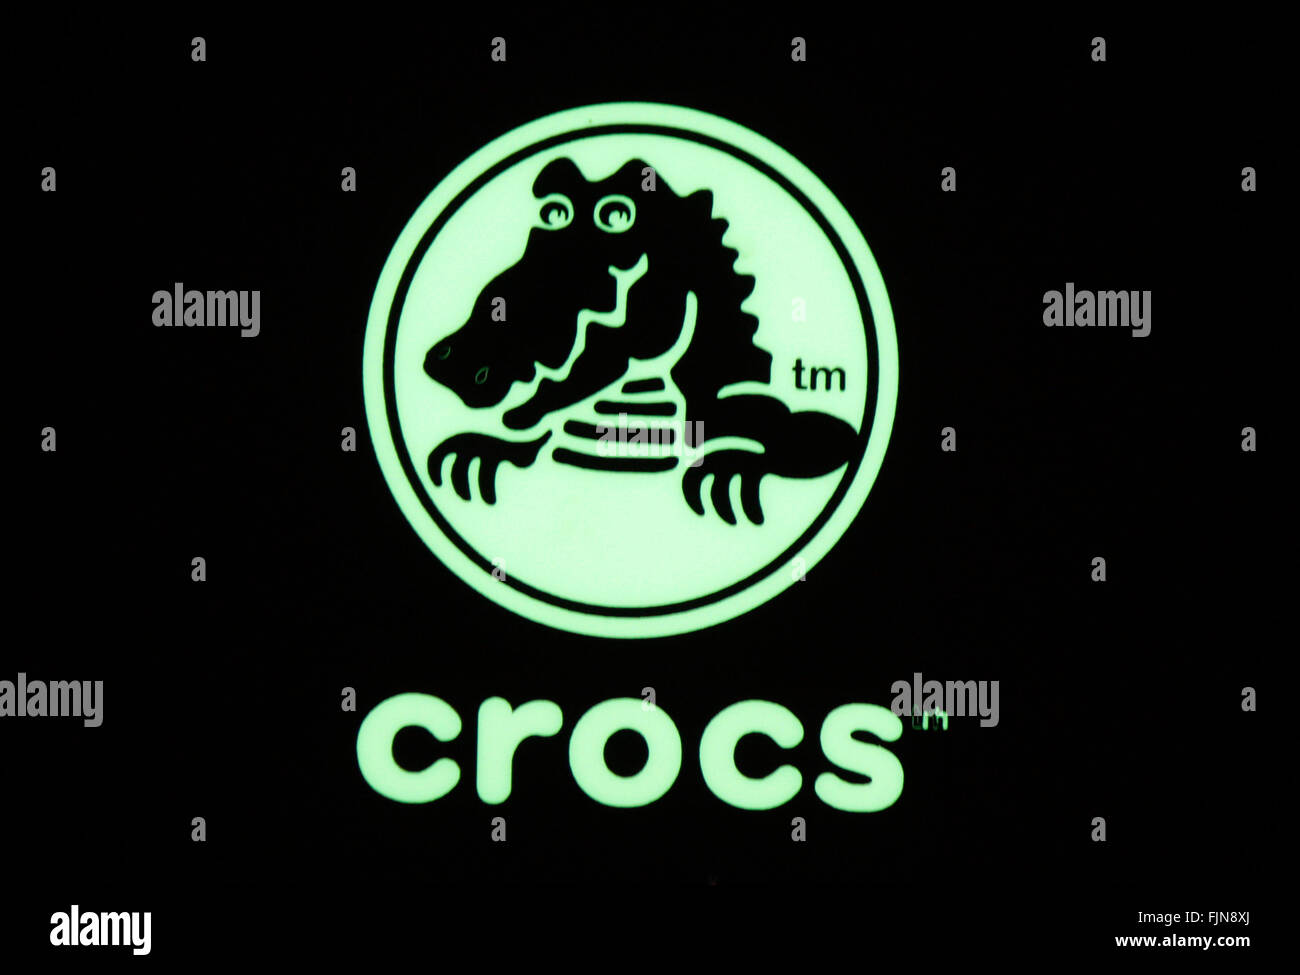 Markenname: "Crocs", Berlin. Stockfoto